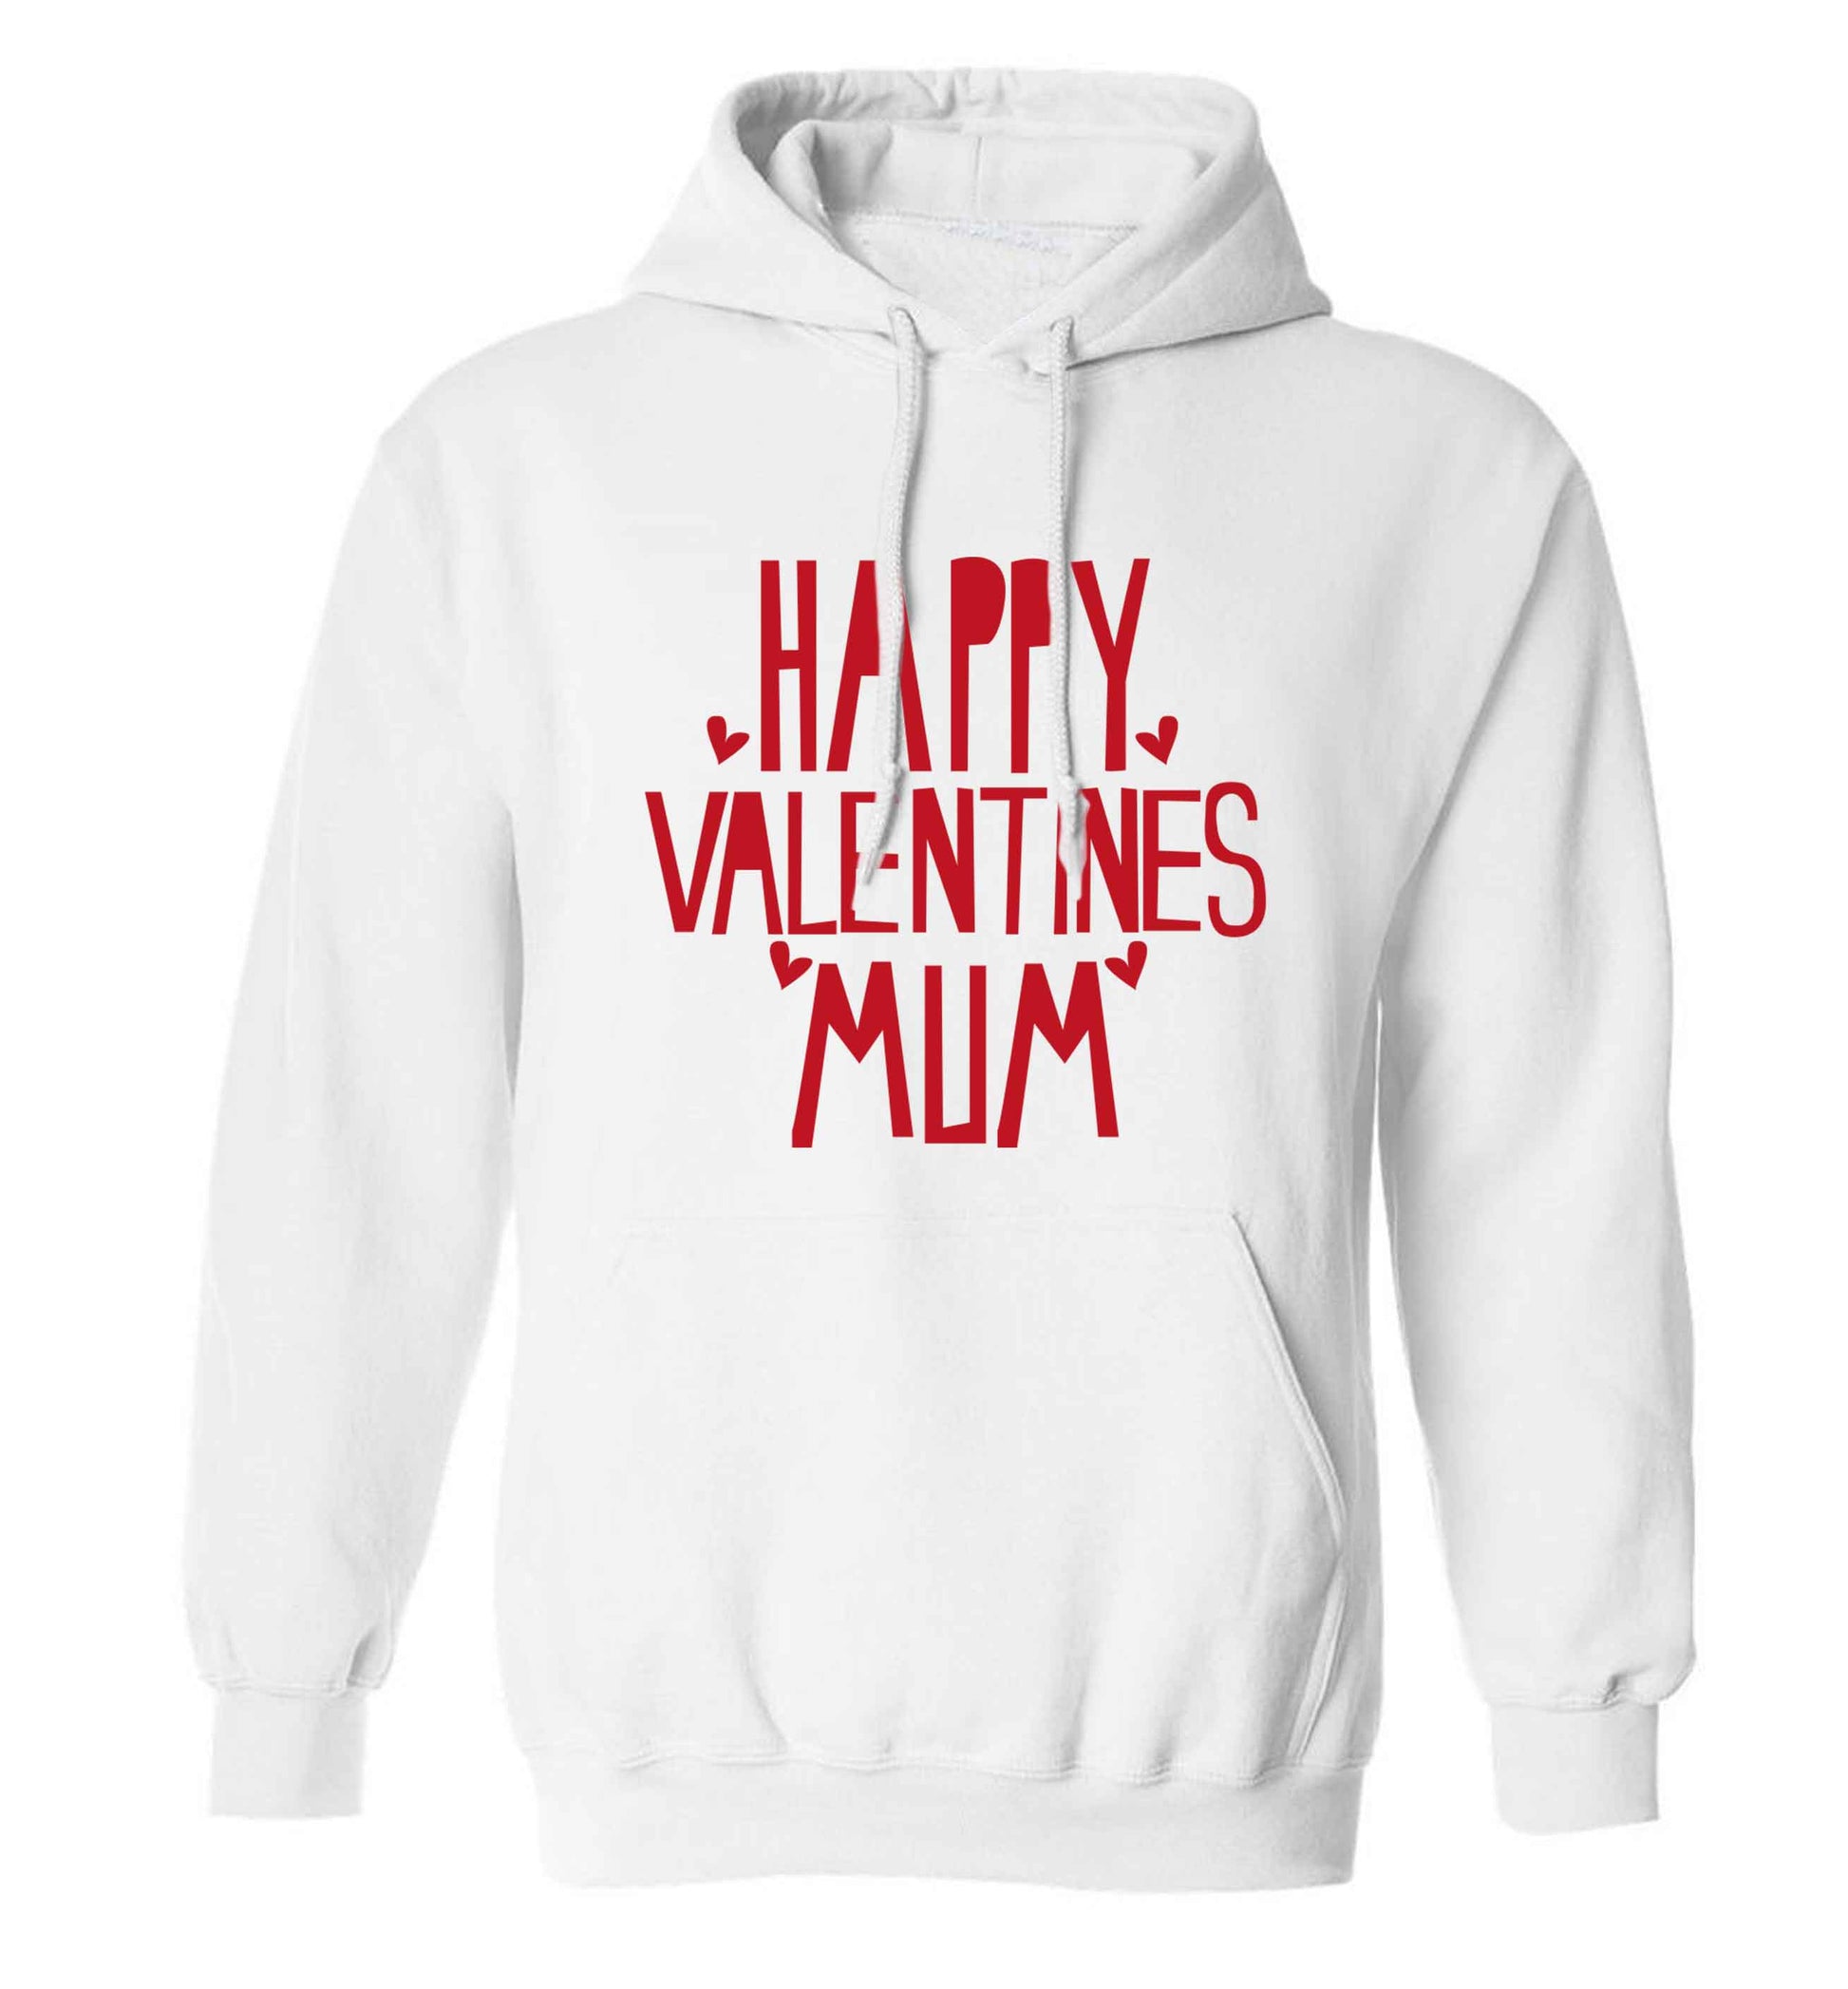 Happy valentines mum adults unisex white hoodie 2XL